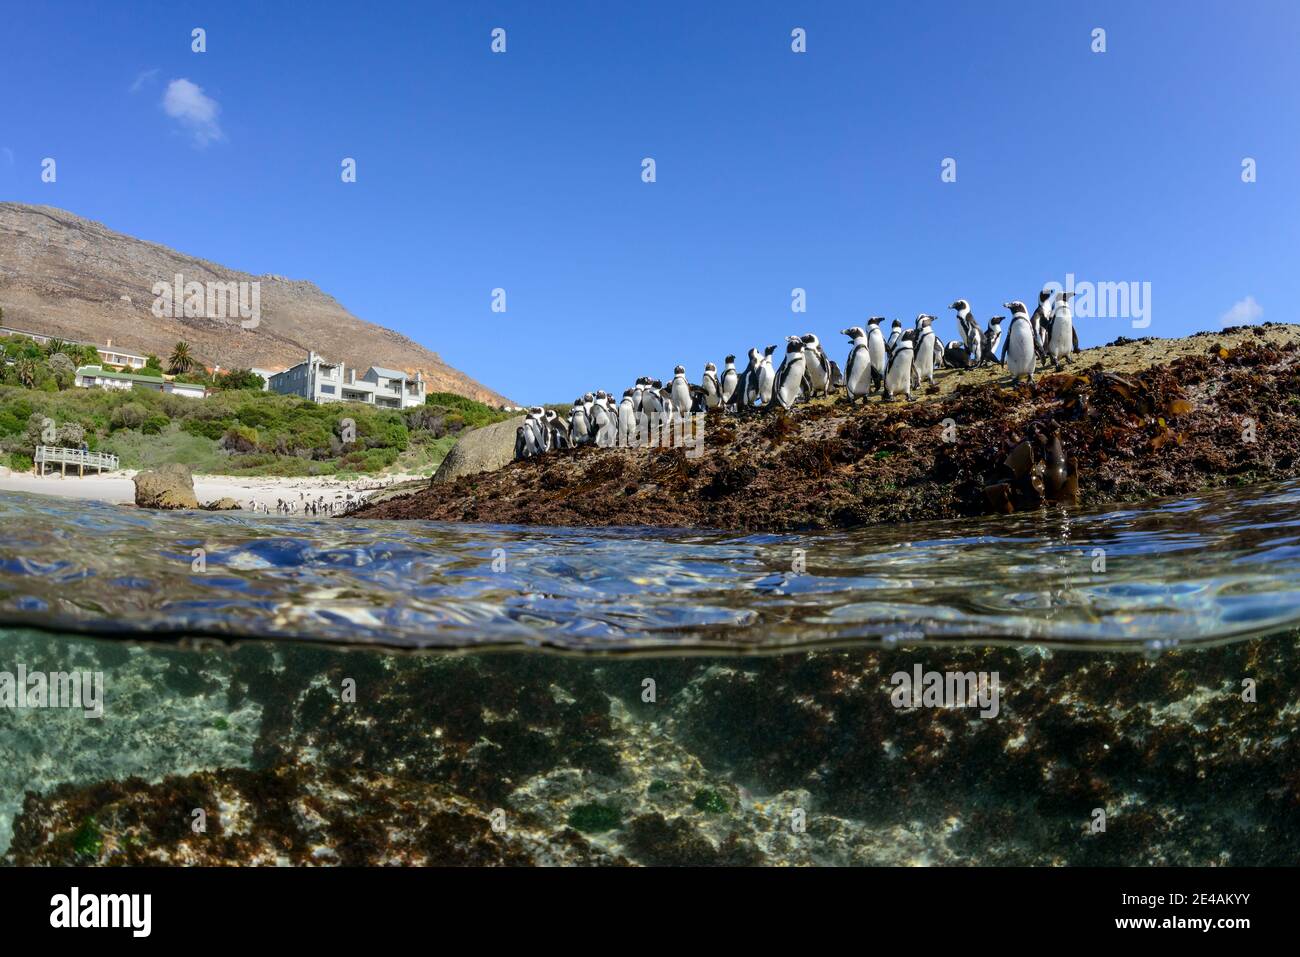 Immagine a livello diviso di una colonia di pinguini africani (Speniscus demersus), Boulders Beach o Boulders Bay, Simons Town, Sudafrica, Oceano Indiano Foto Stock